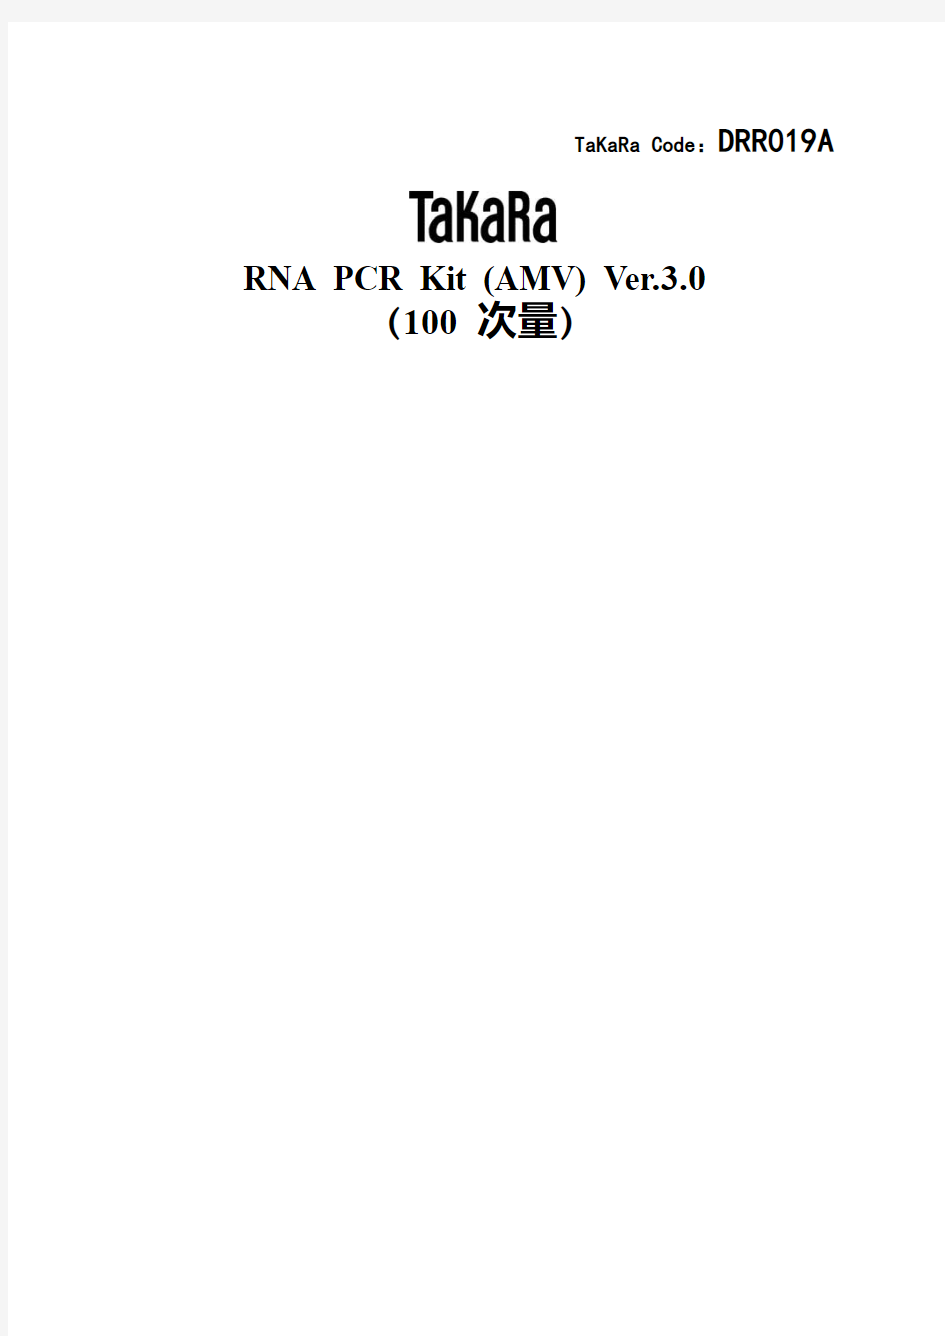 RNA PCR Kit (AMV) Ver.3.0